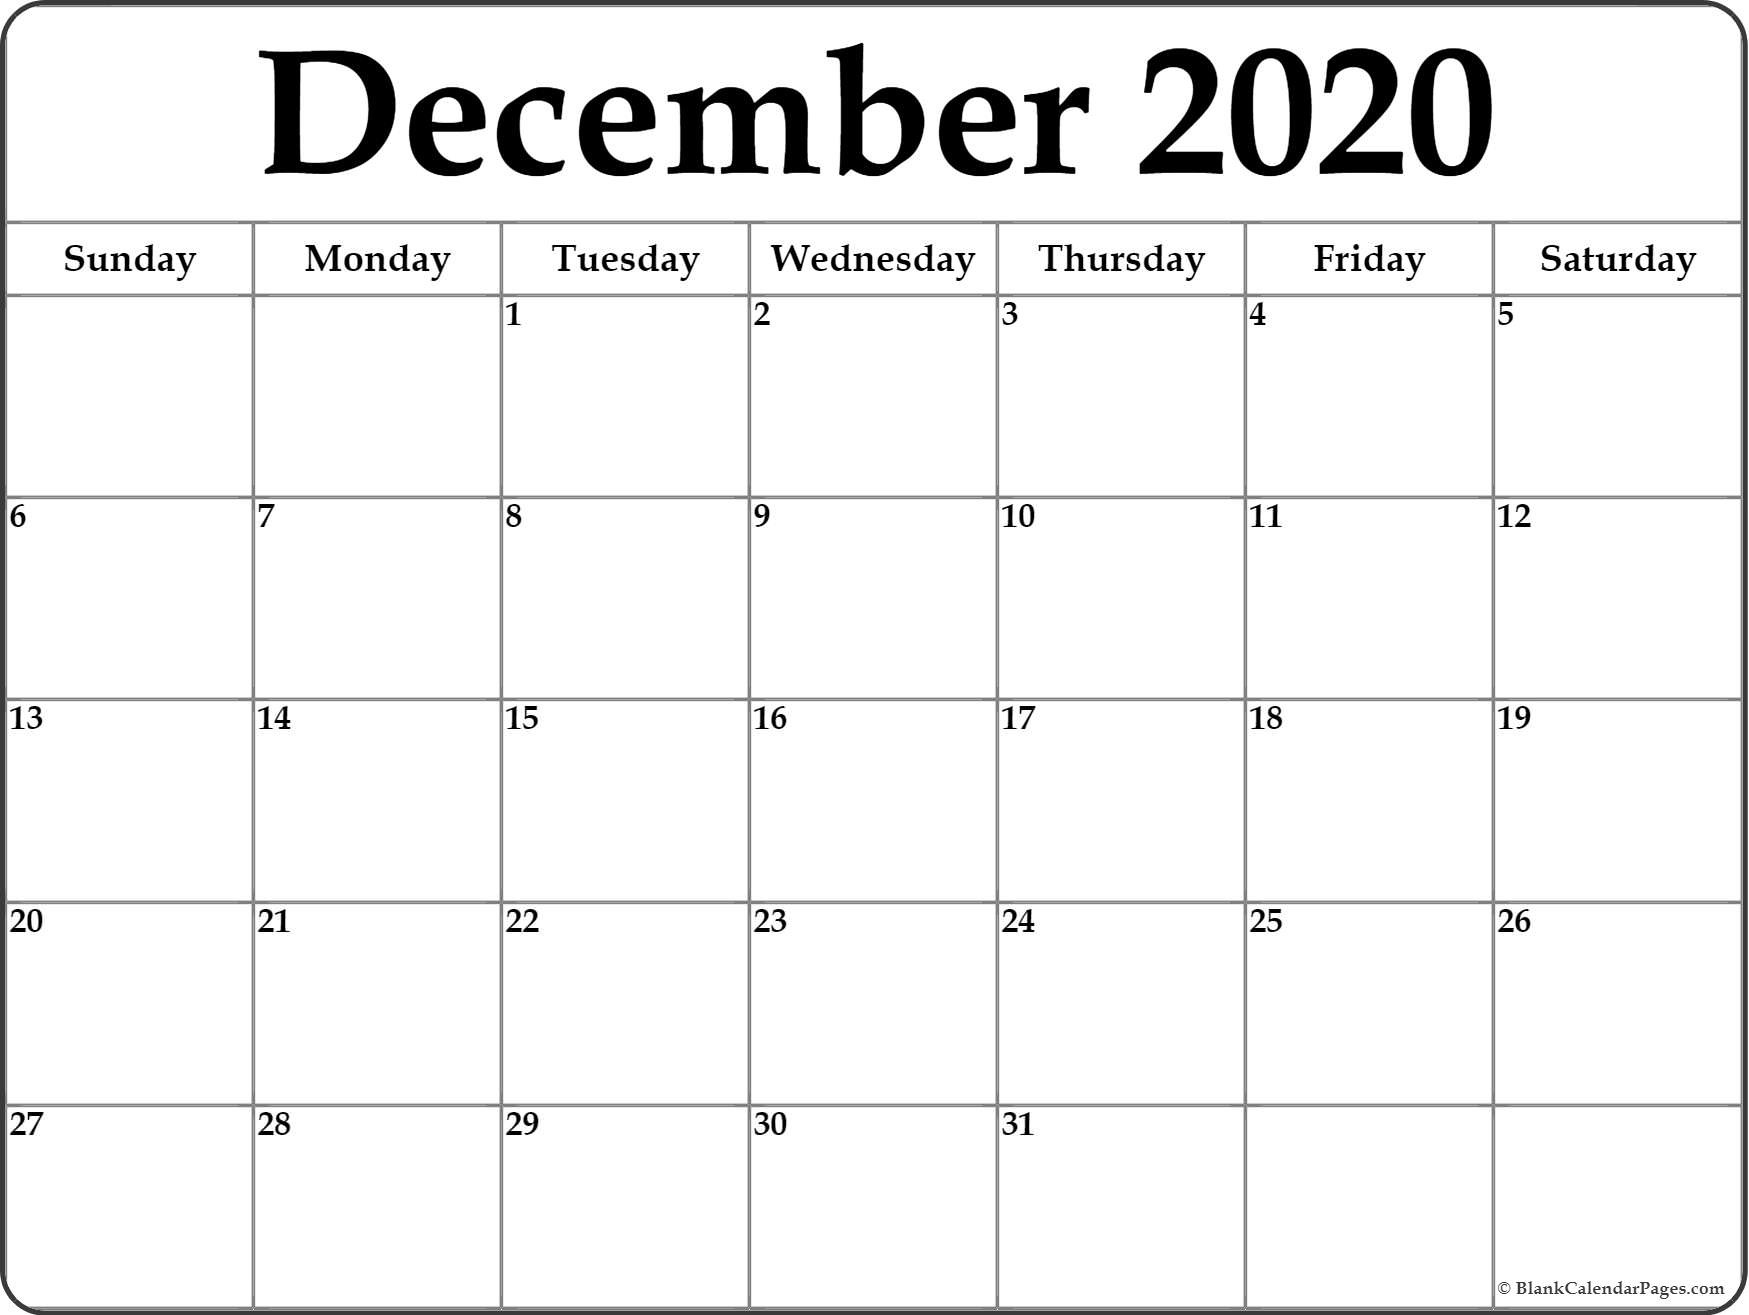 December Monthly Calendar 2020 - Monte-Blank Calendar December 2020 Letter Size